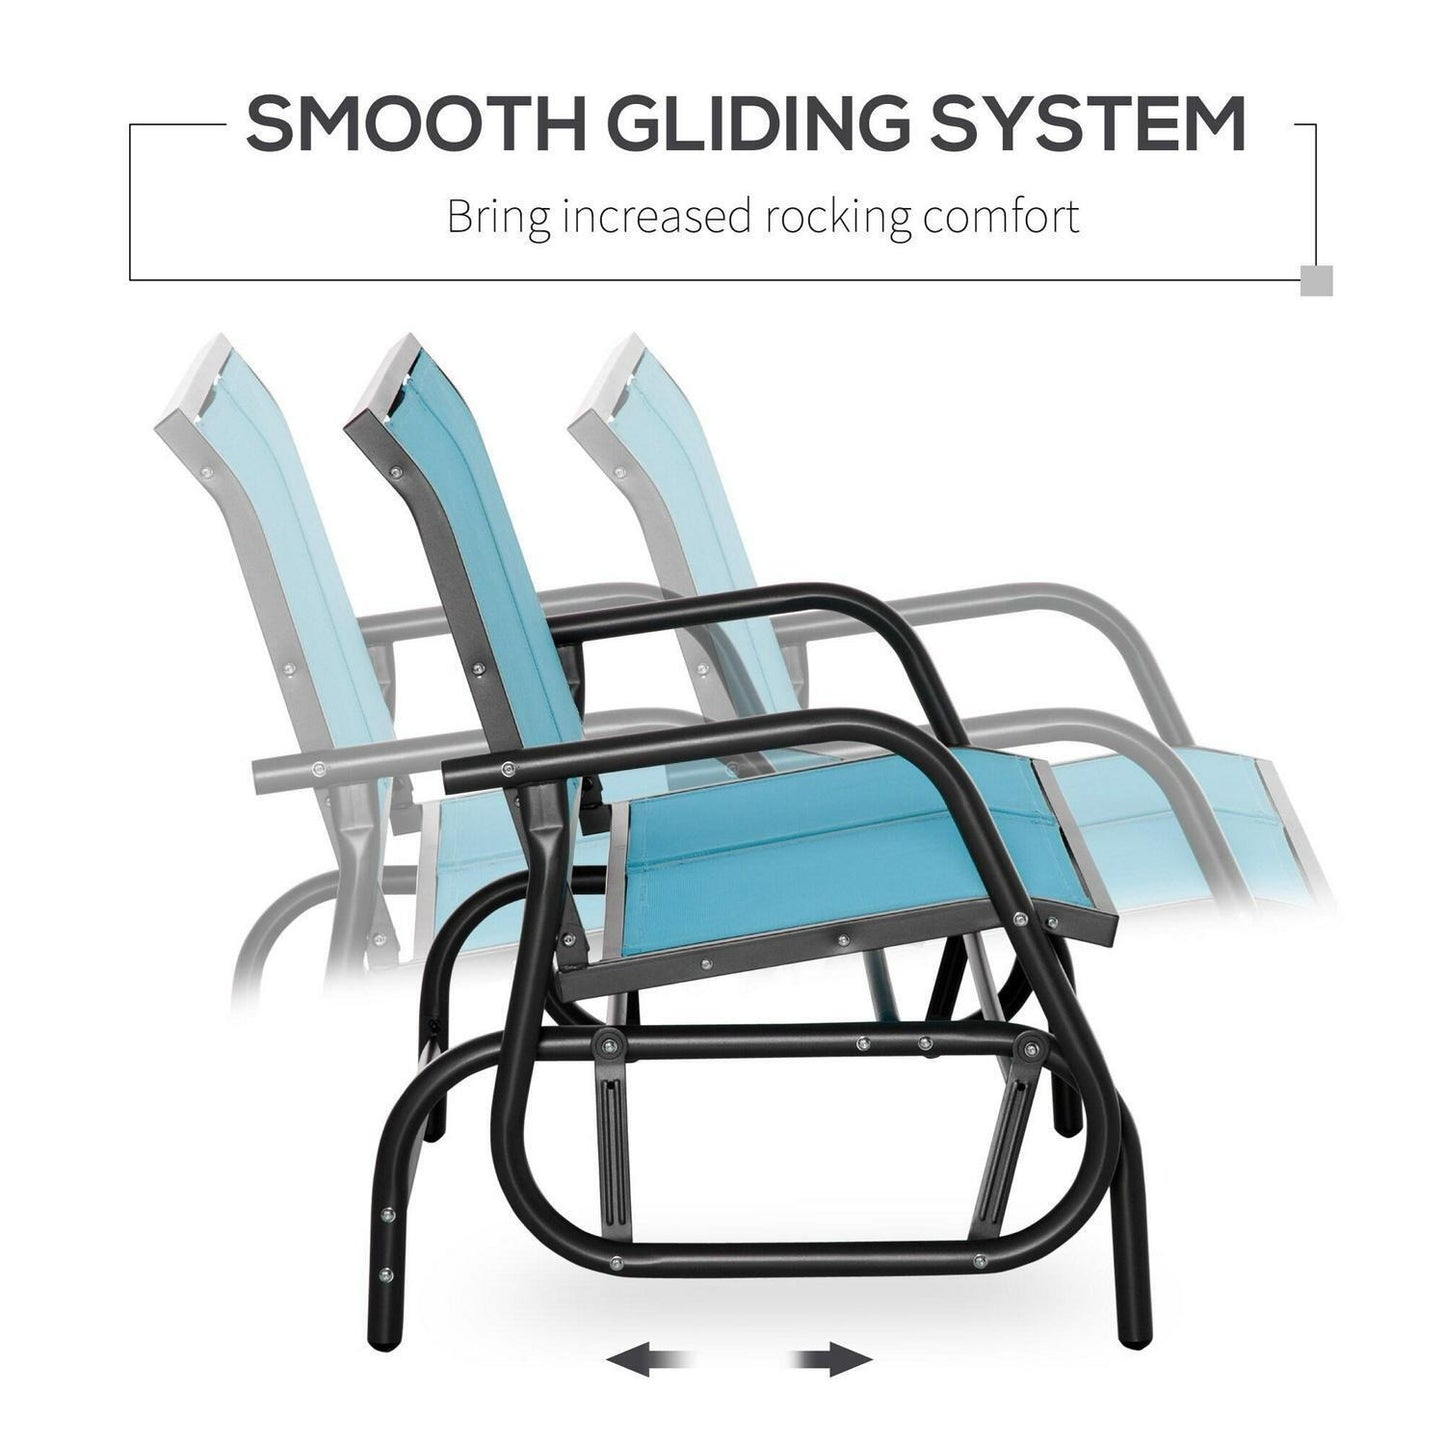 2-Person Glider Rocking Chair Bench For Patio Deck Yard in Seafoam Blue